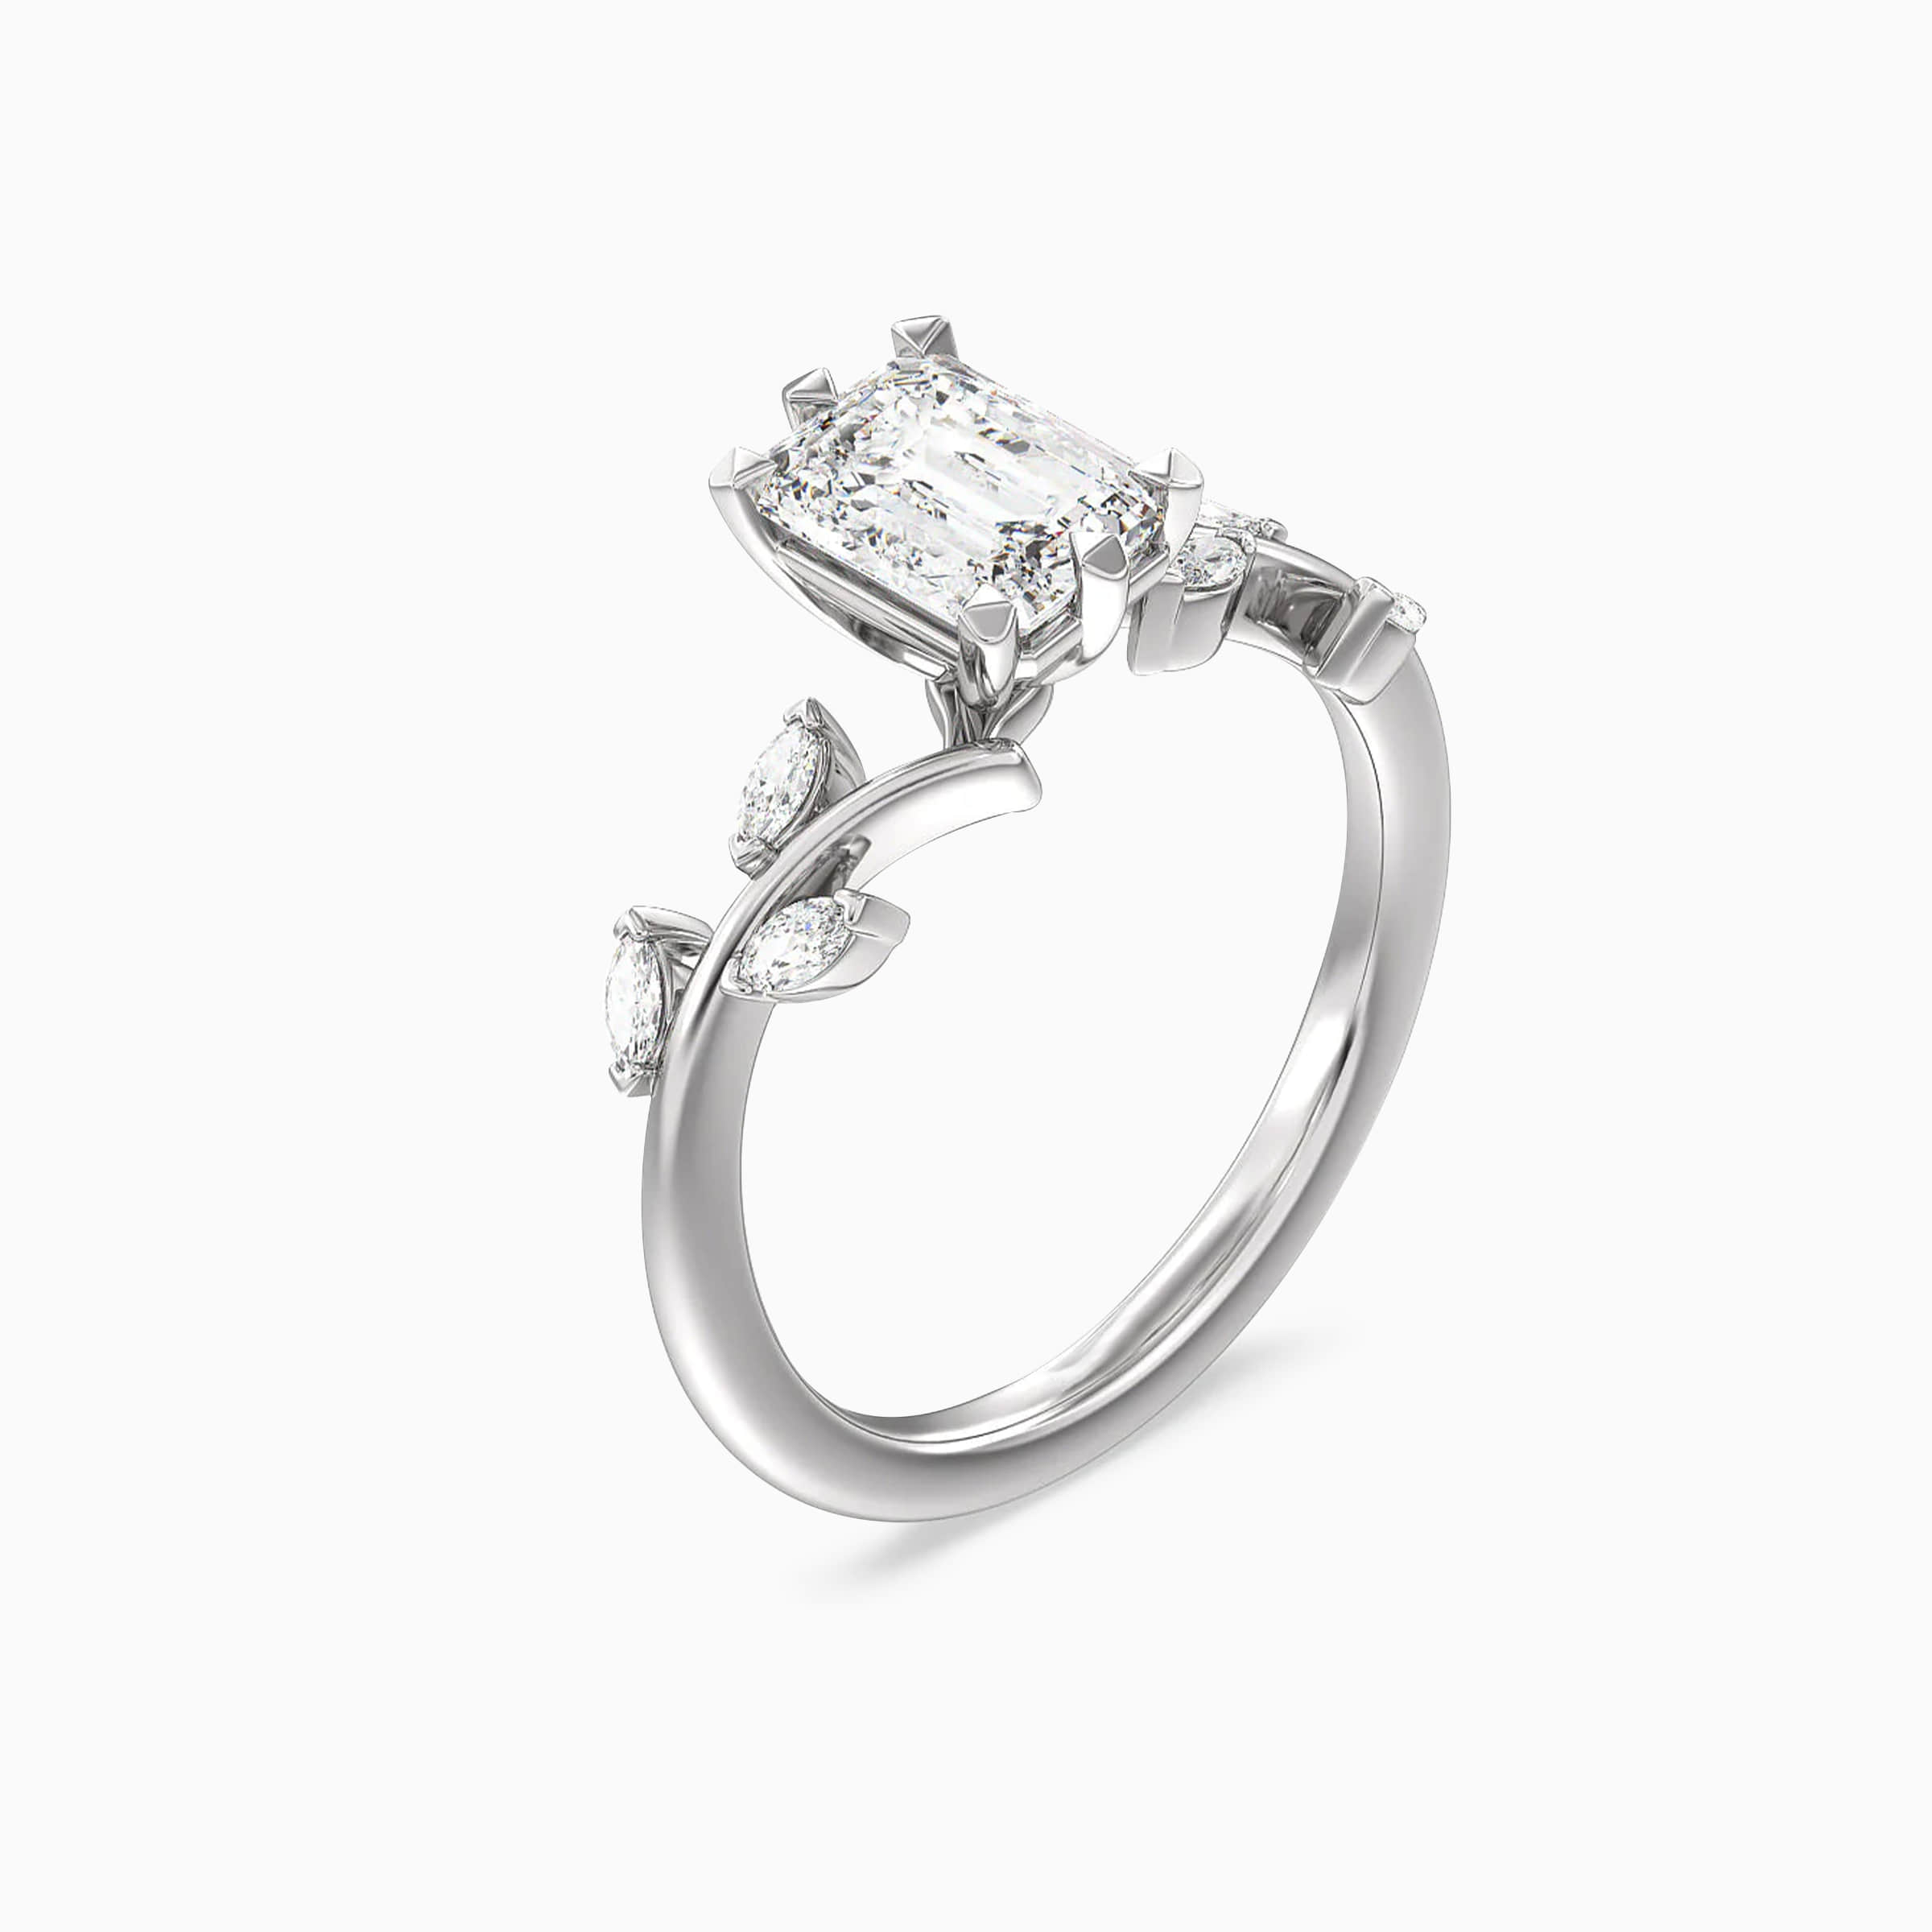 Darry Ring emerald cut vine engagement ring in platinum